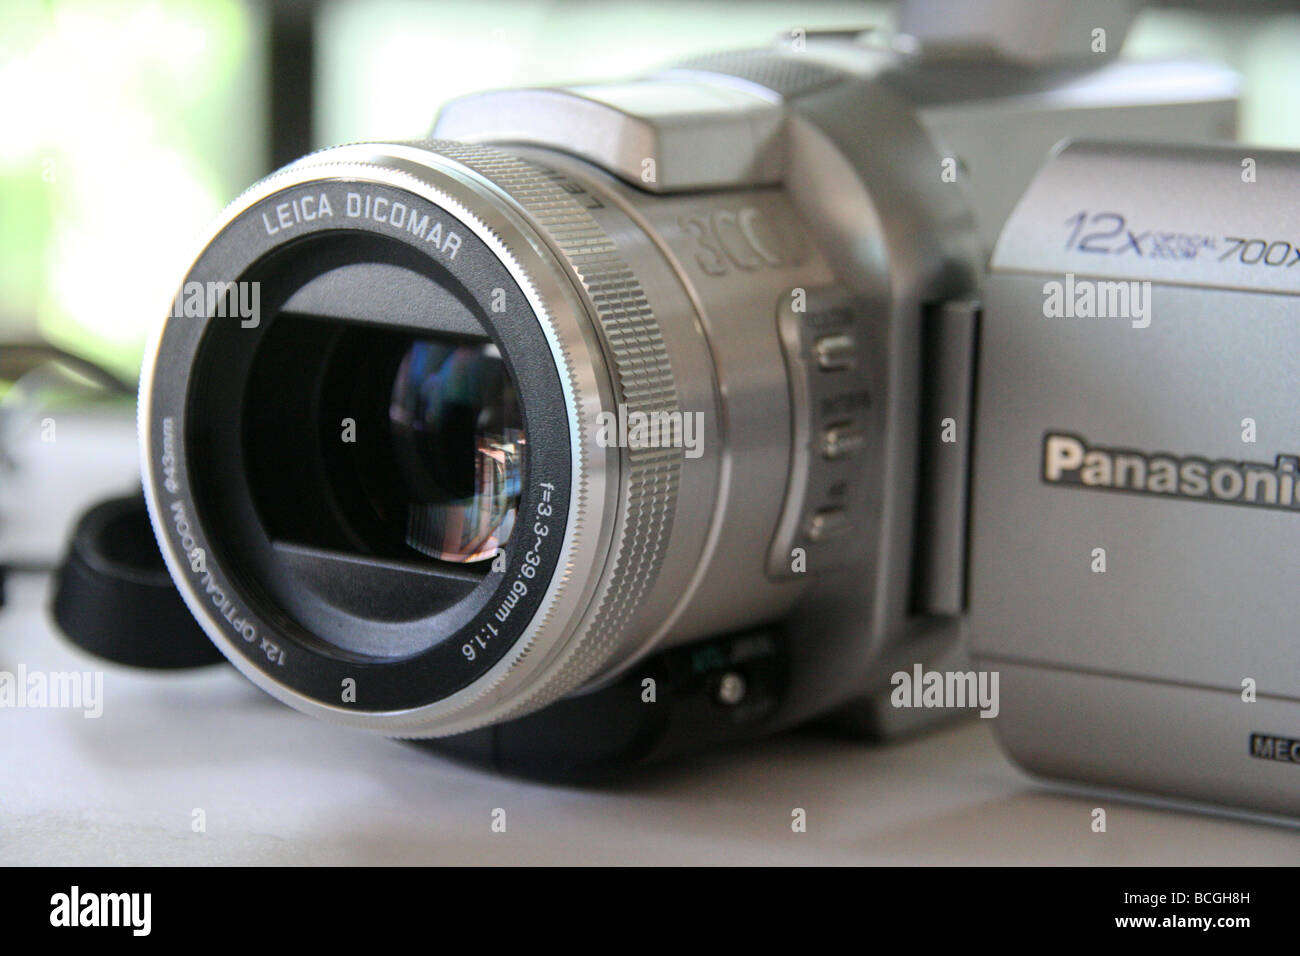 Videocamera Panasonic gs400 Stock Photo